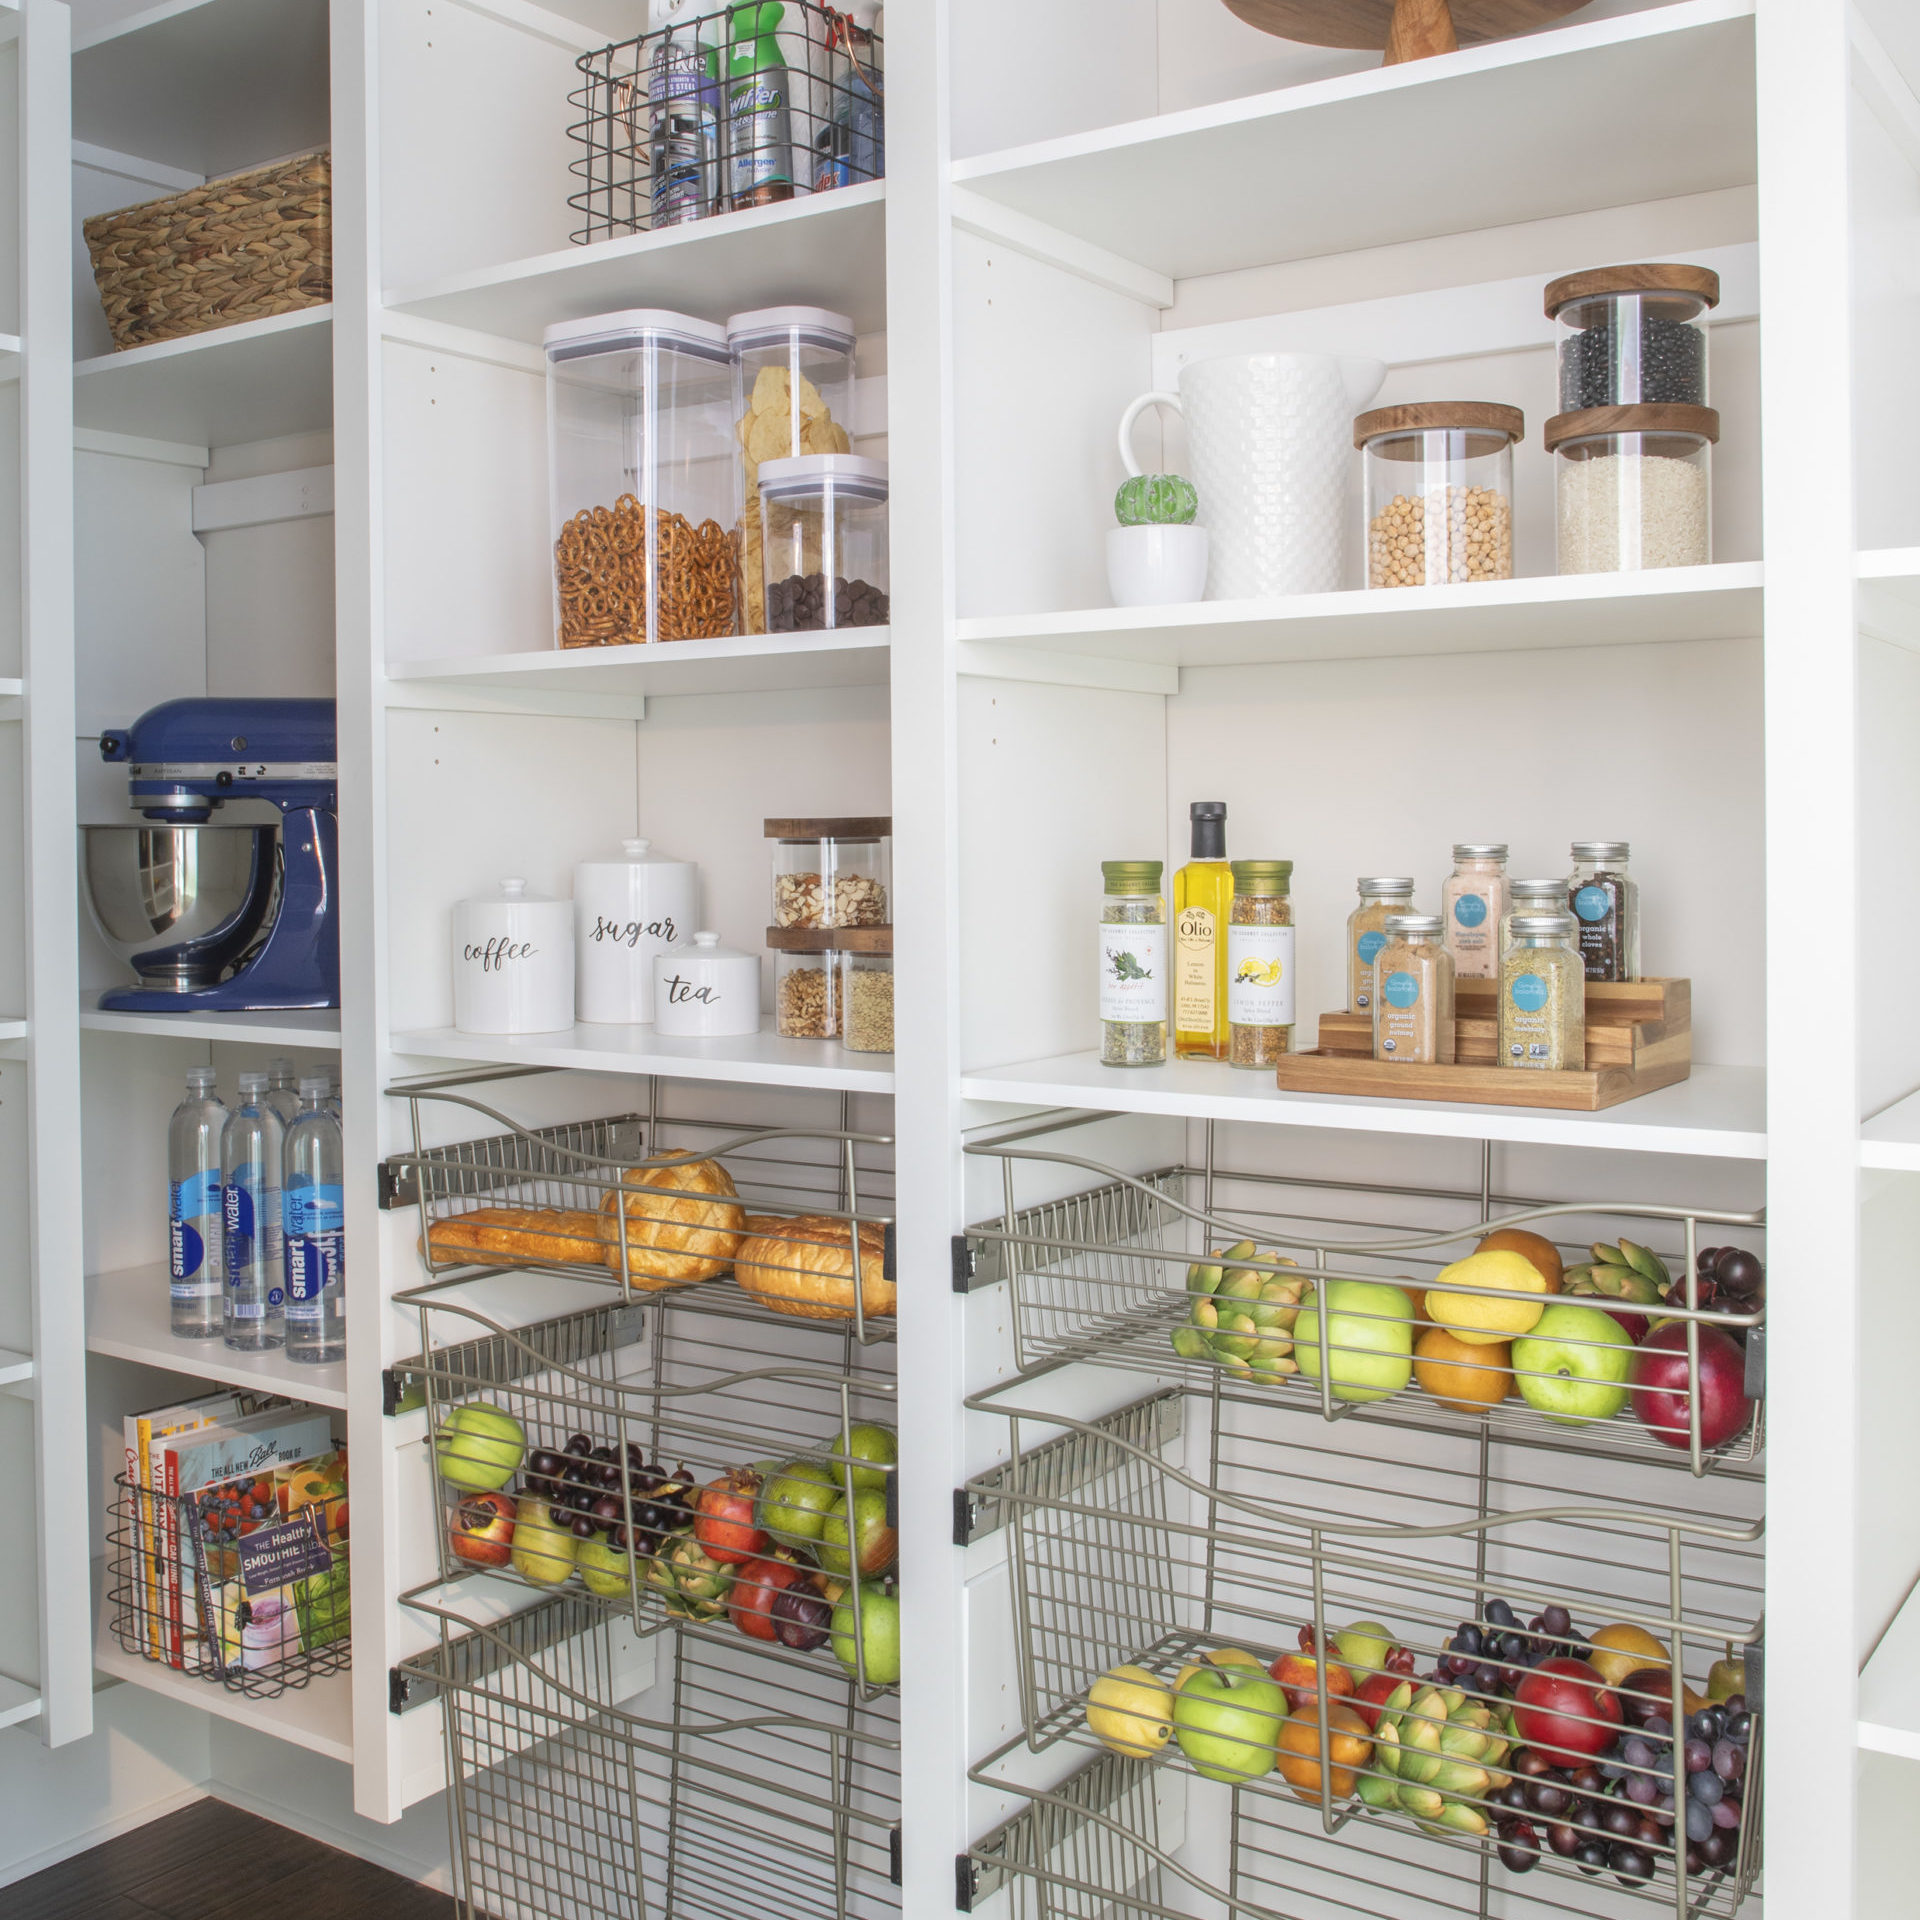 6 Storage Organizing Tips For Small, Modular Pantry Shelving